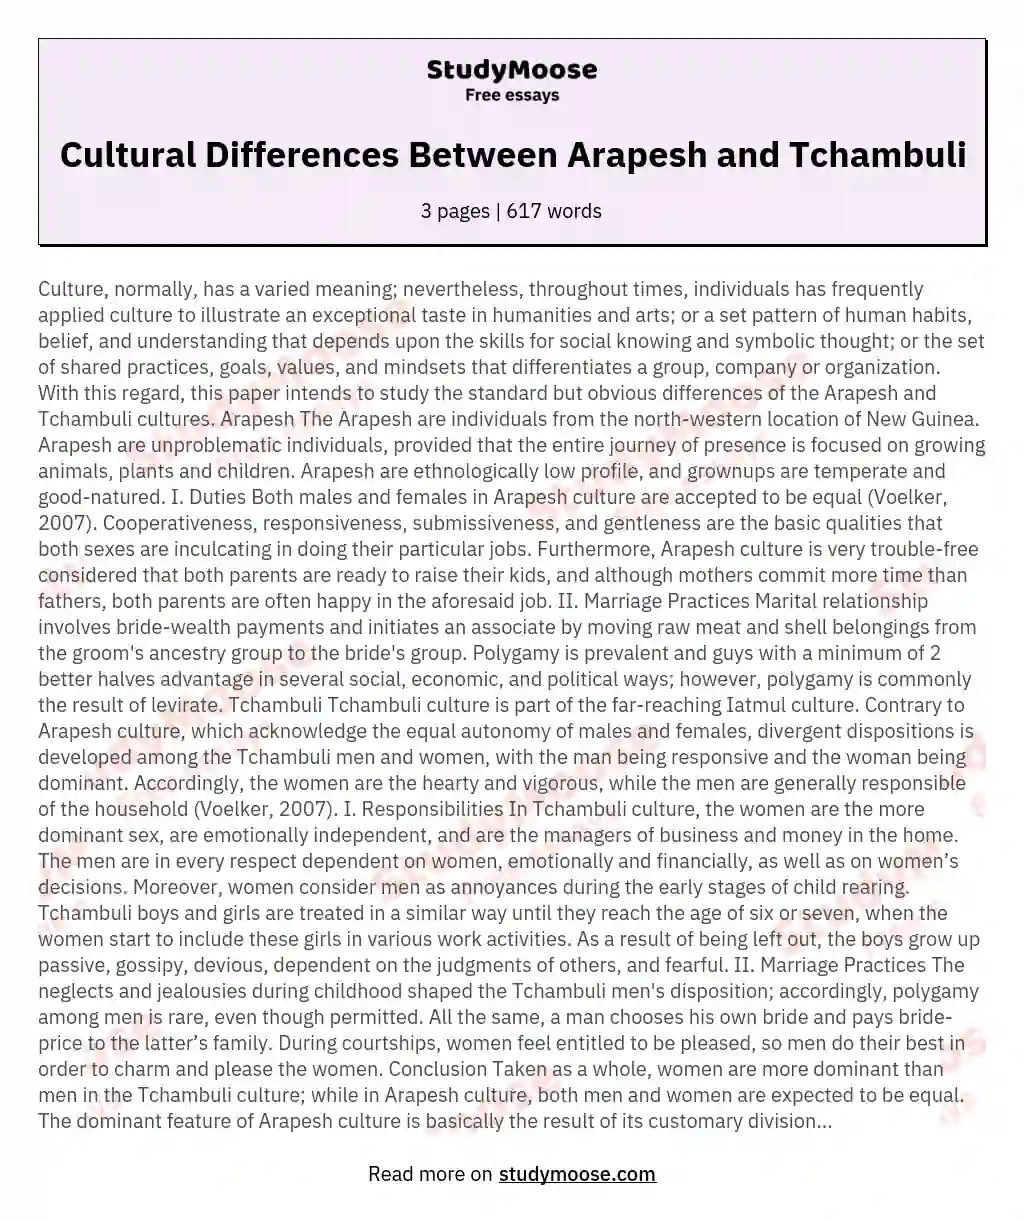 Cultural Differences Between Arapesh and Tchambuli essay